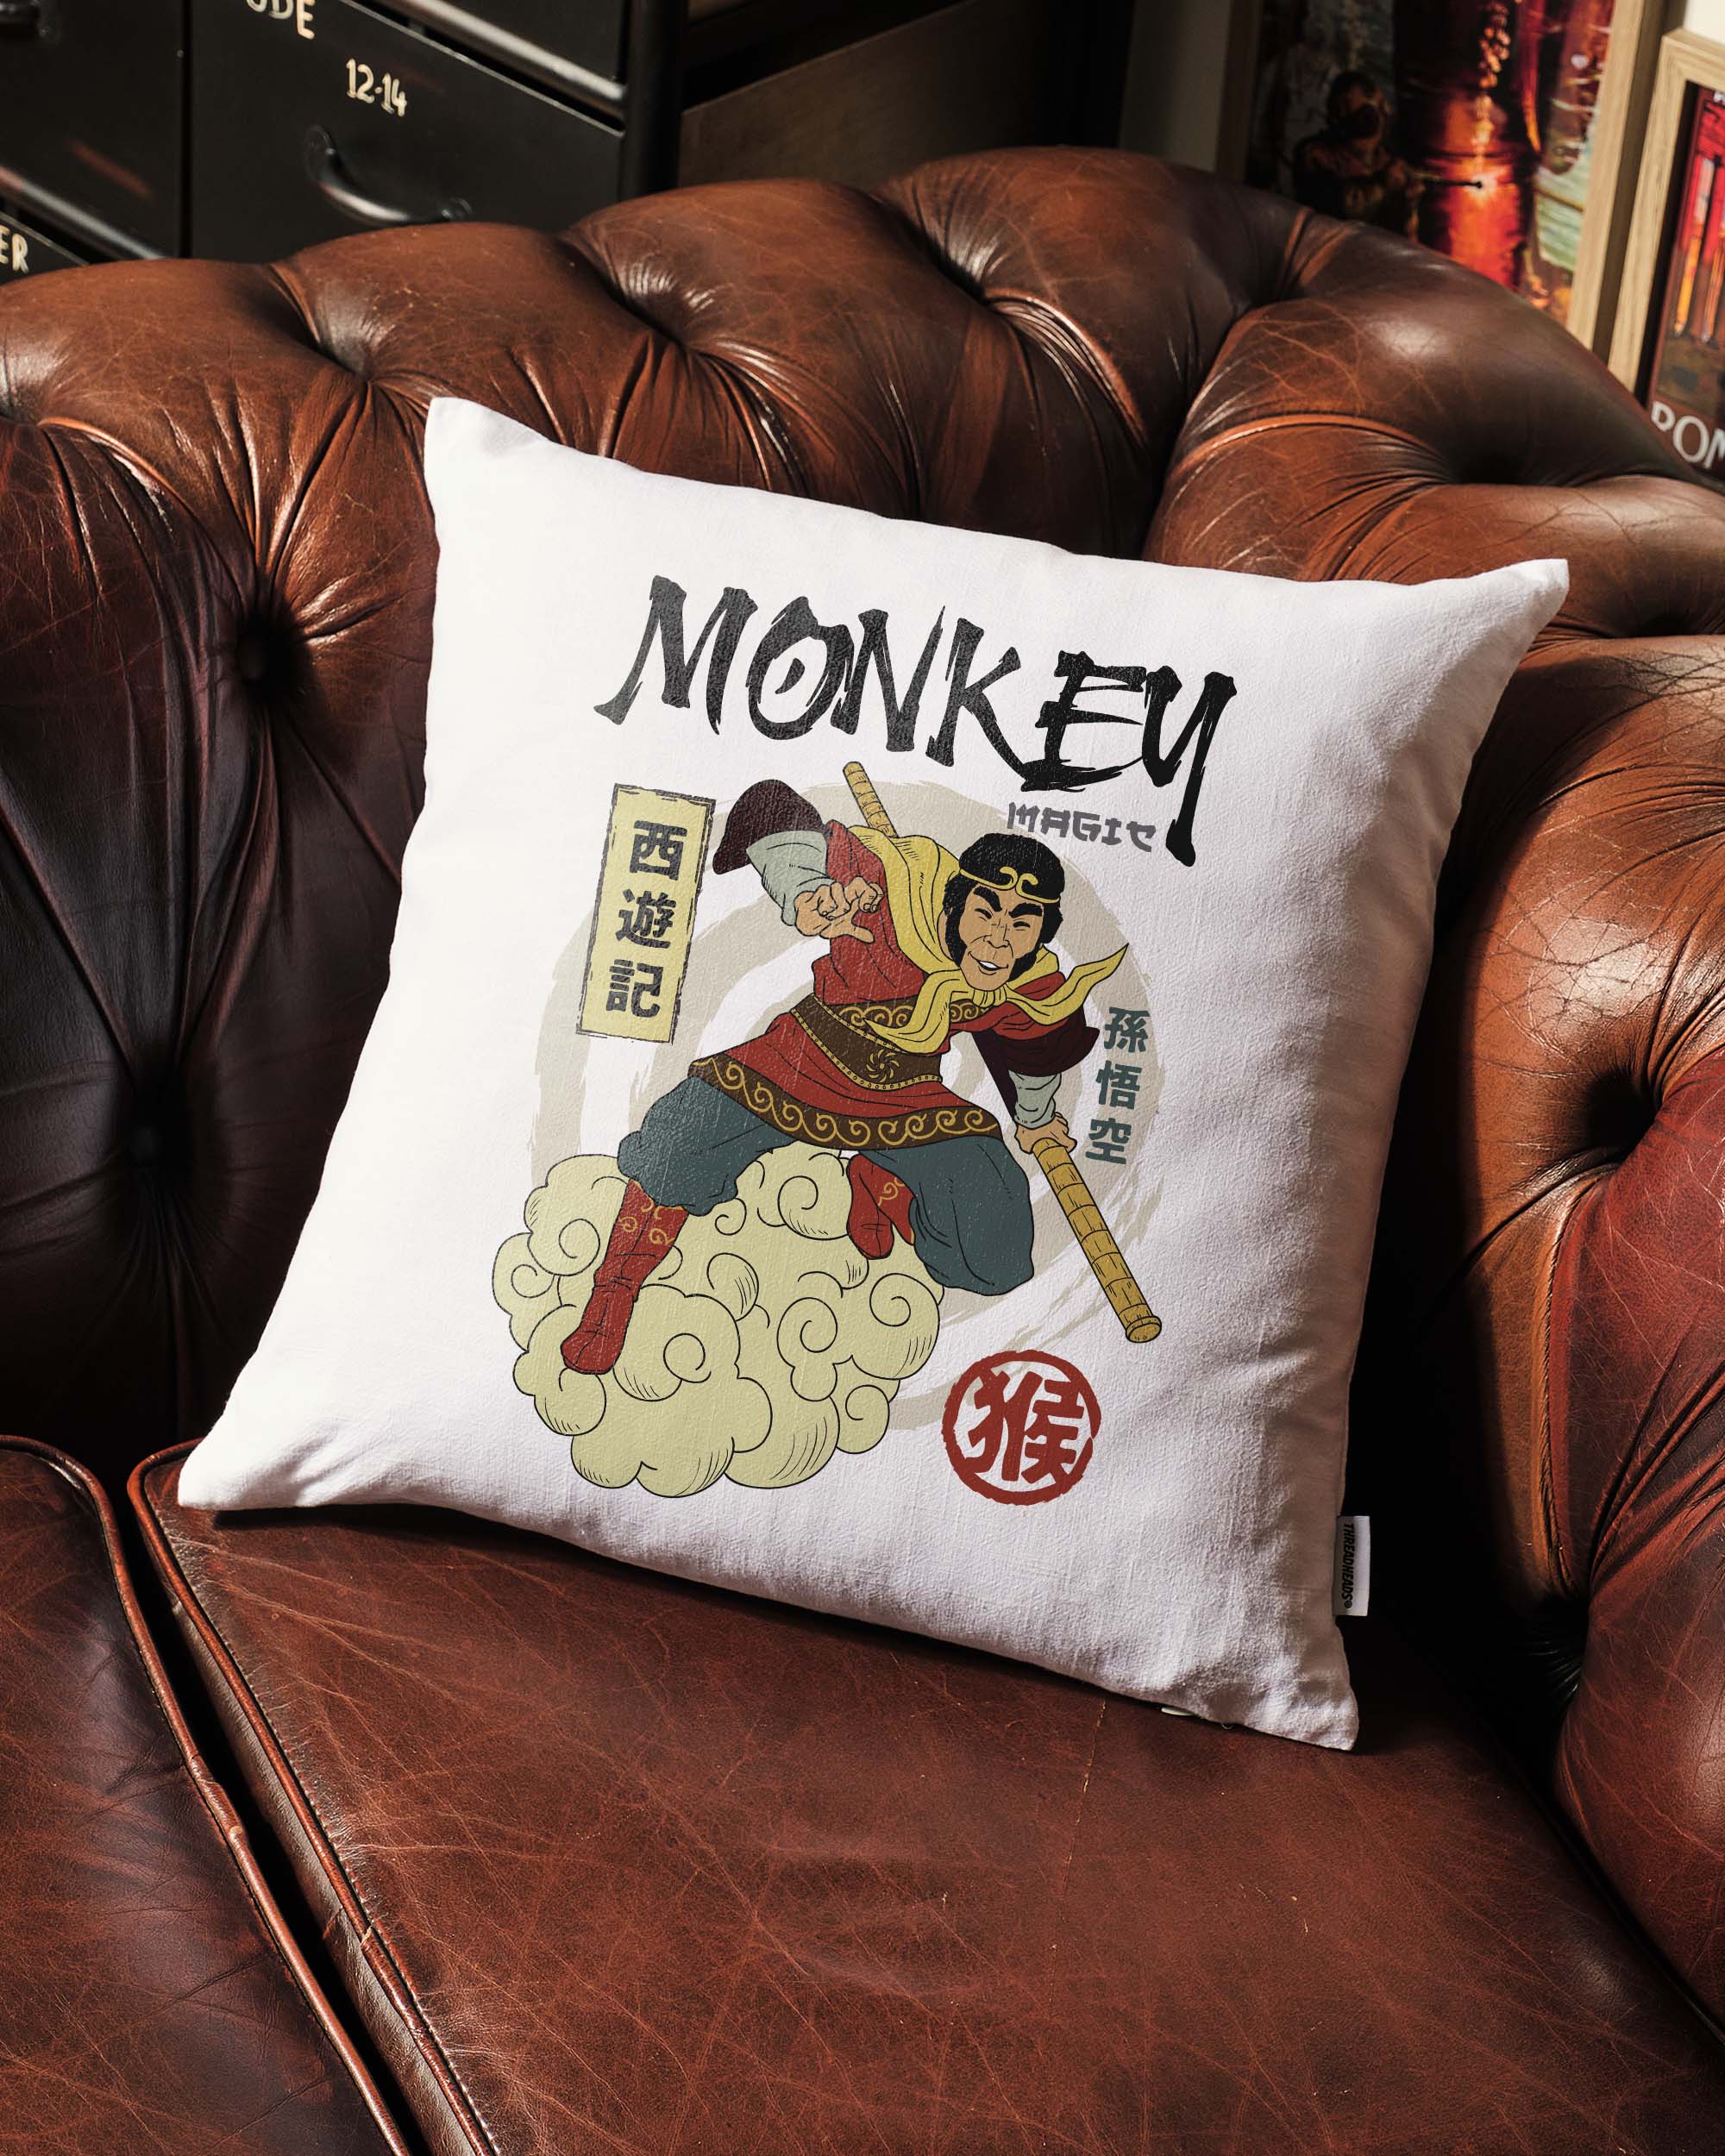 Monkey Magic Cushion